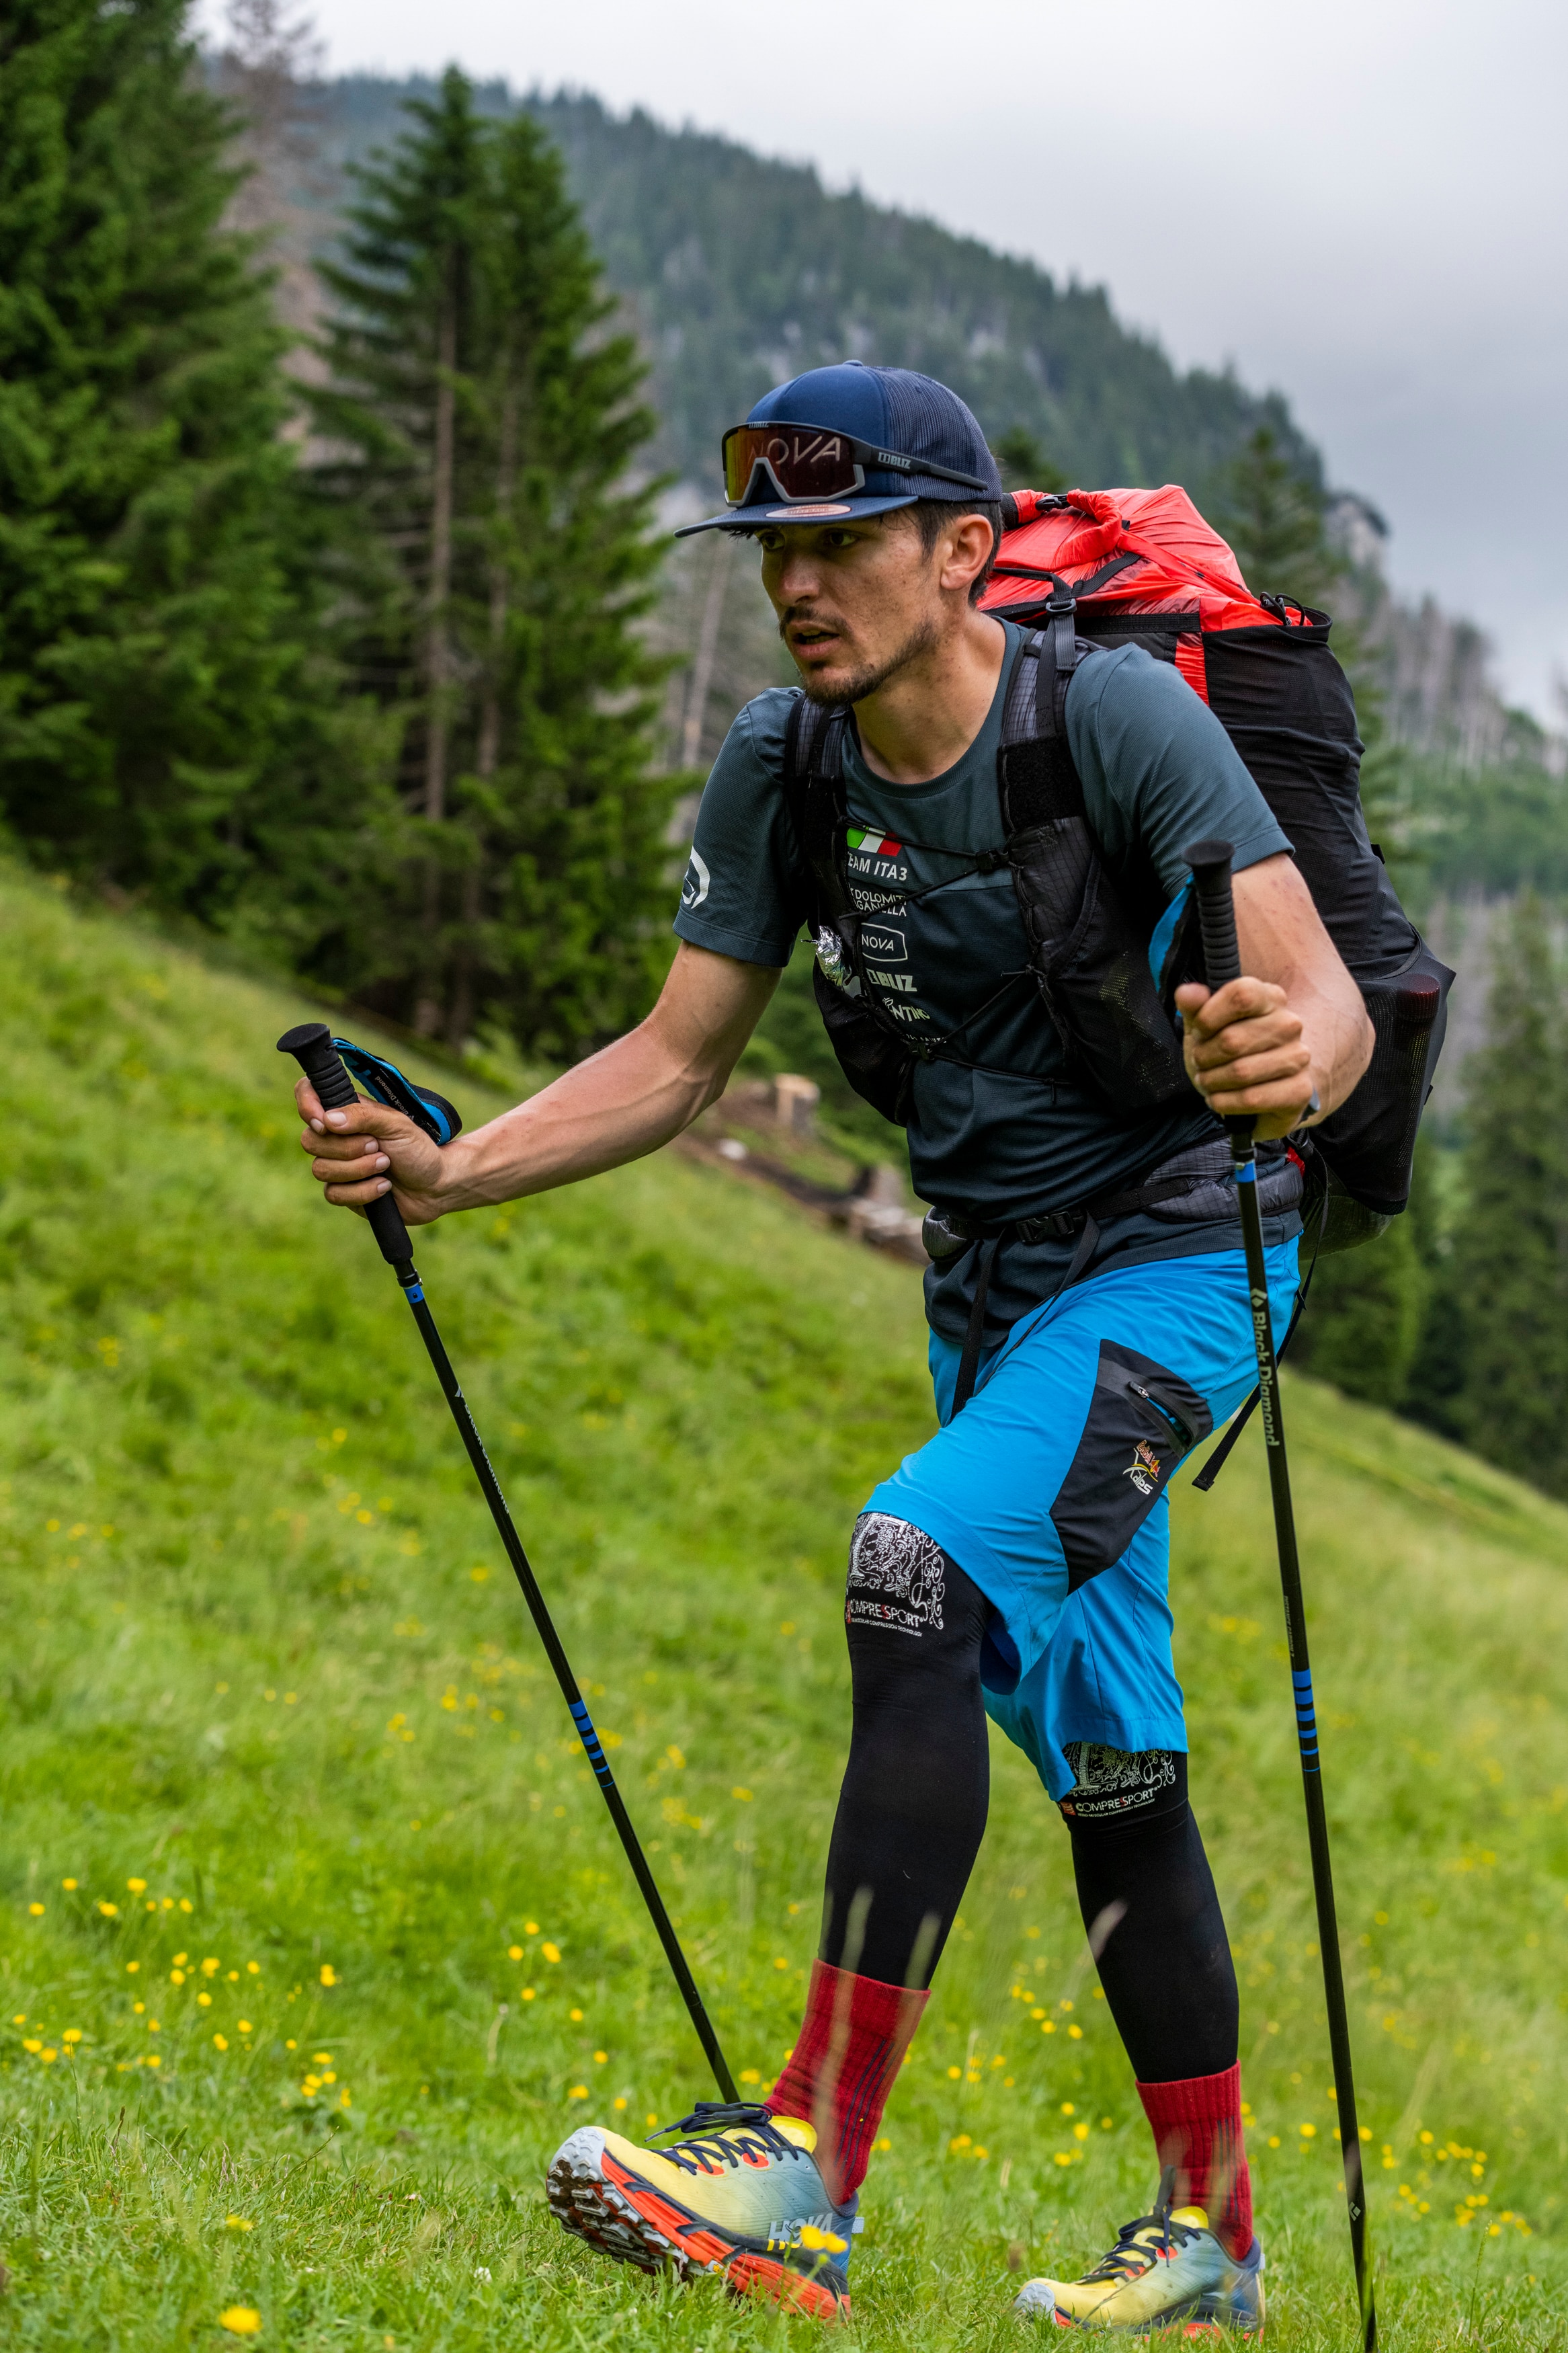 ITA3 hiking during X-Alps on Säntis, Switzerland on June 25, 2021